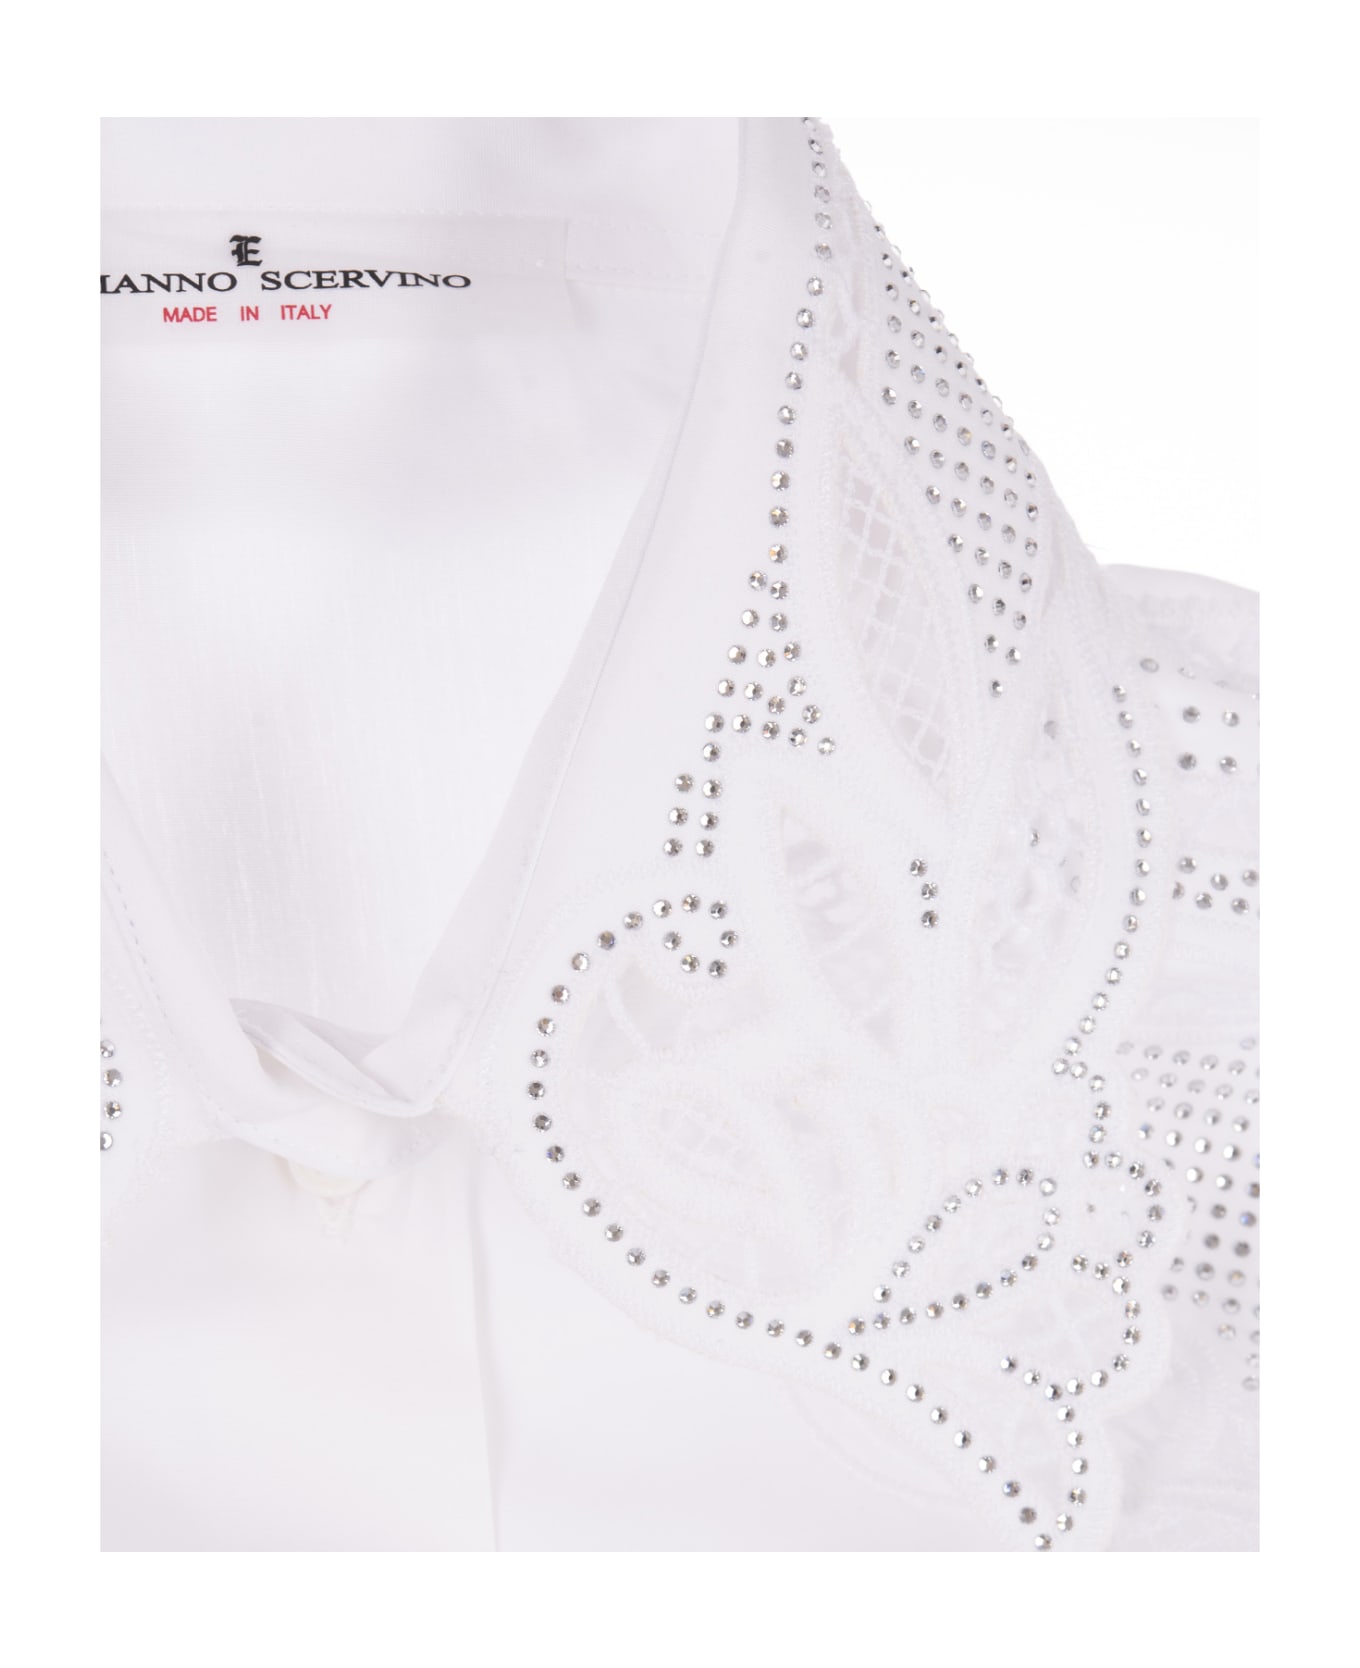 Ermanno Scervino White Over Shirt With Sangallo Lace Cut-outs - White